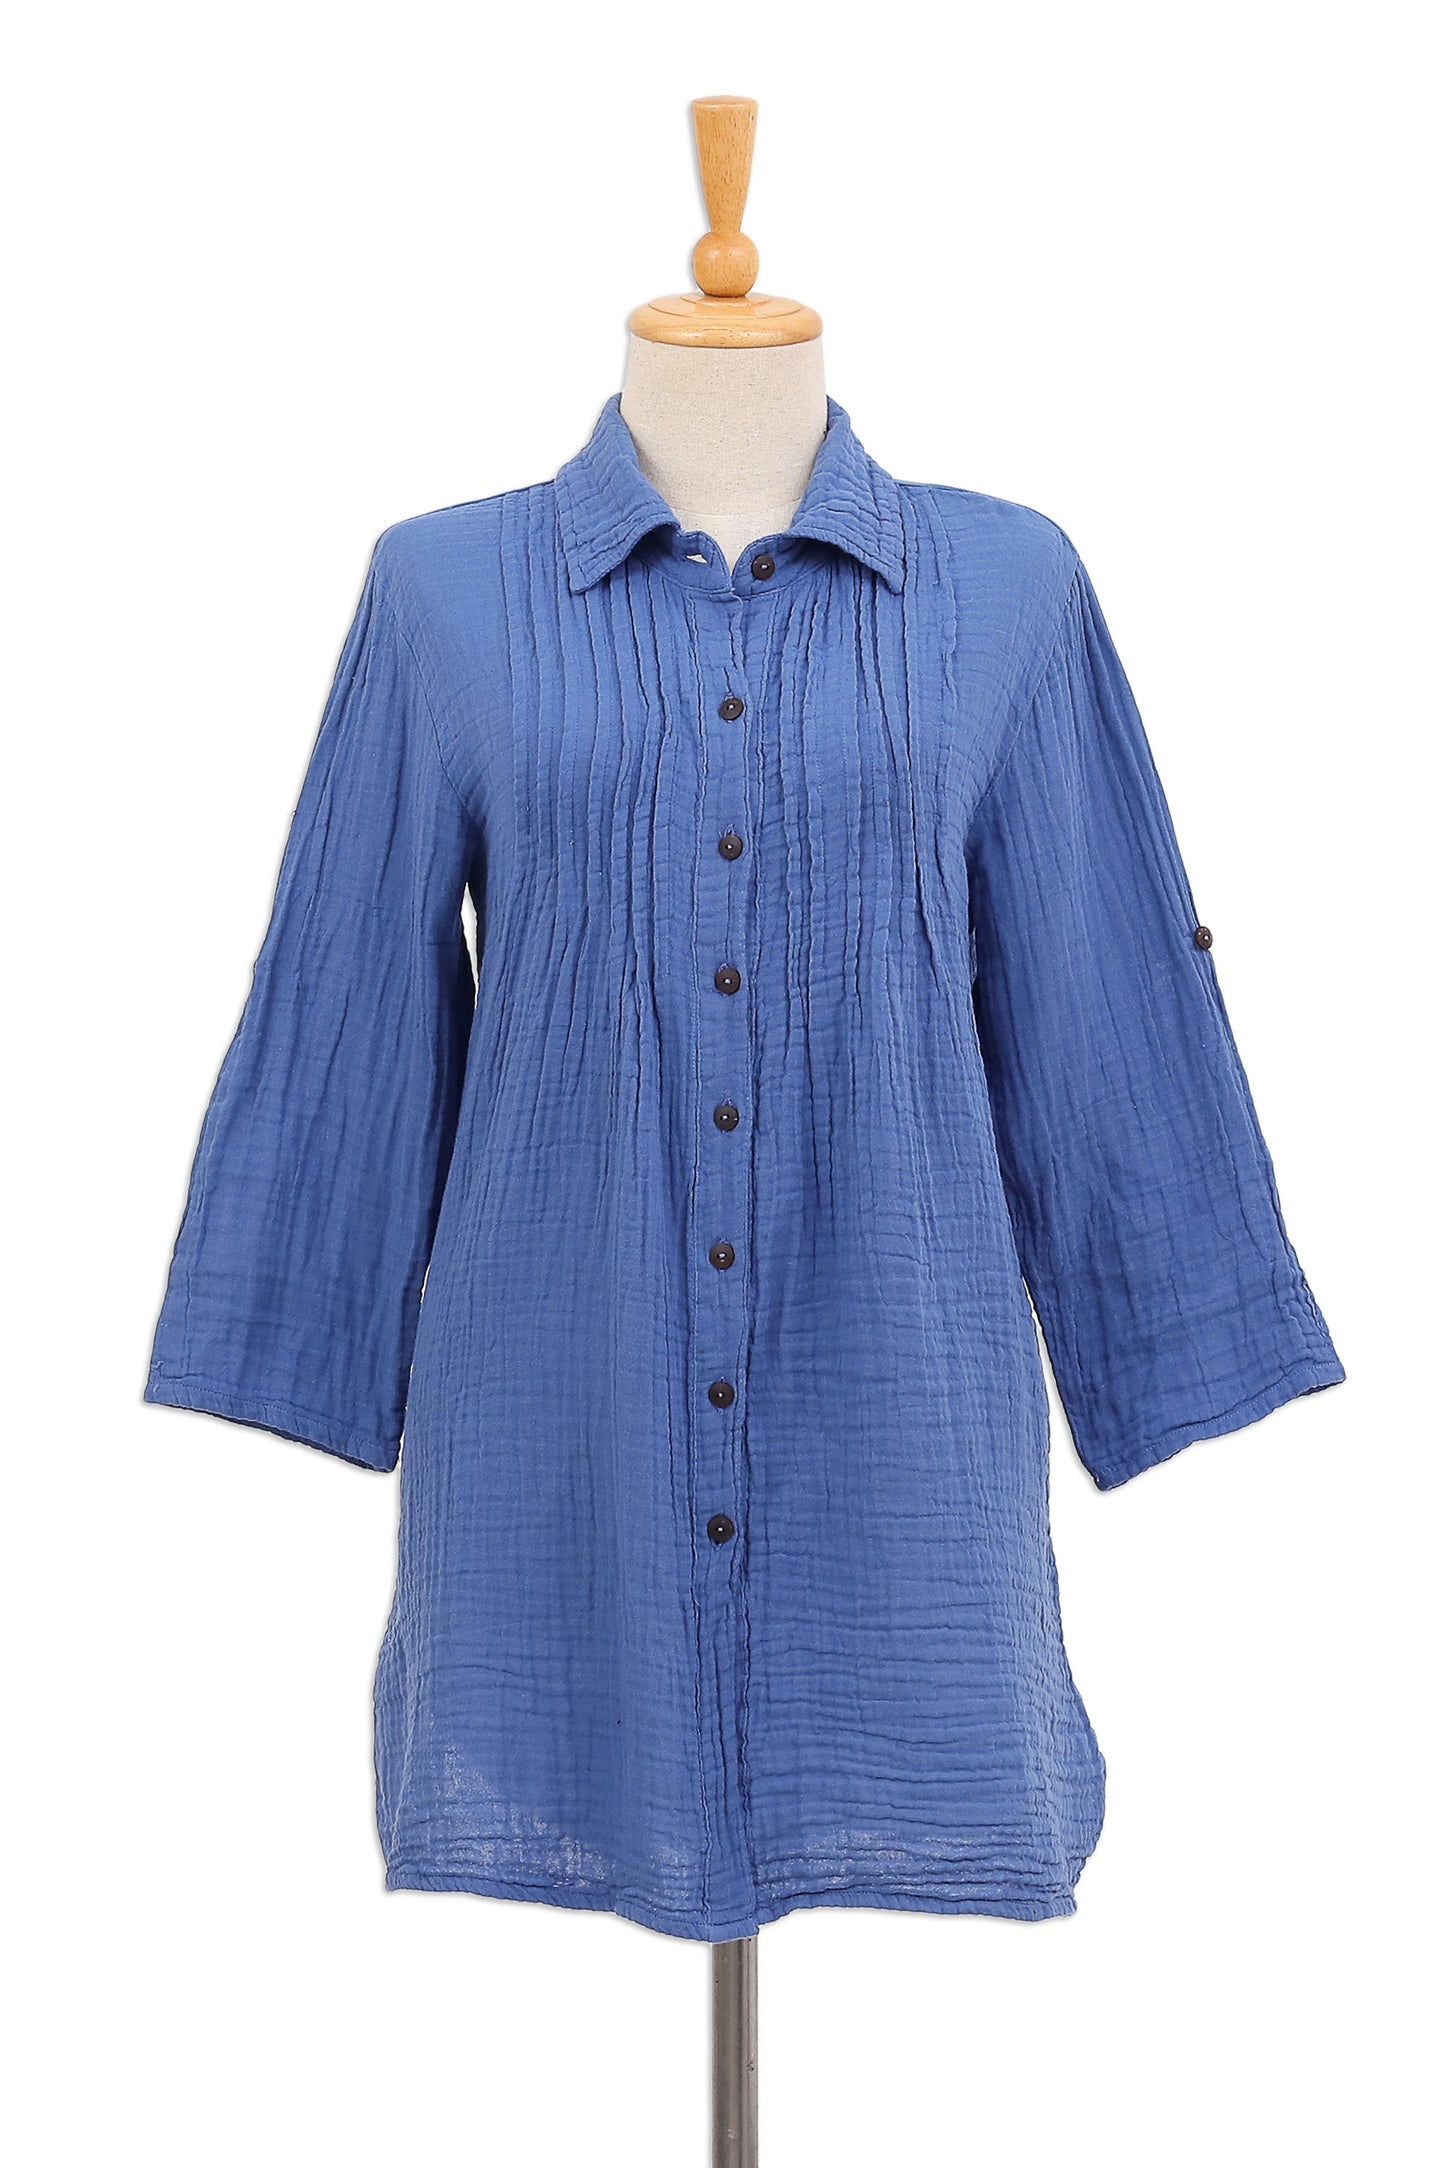 Periwinkle Pintucks Blue Cotton Gauze Shirt from Thailand